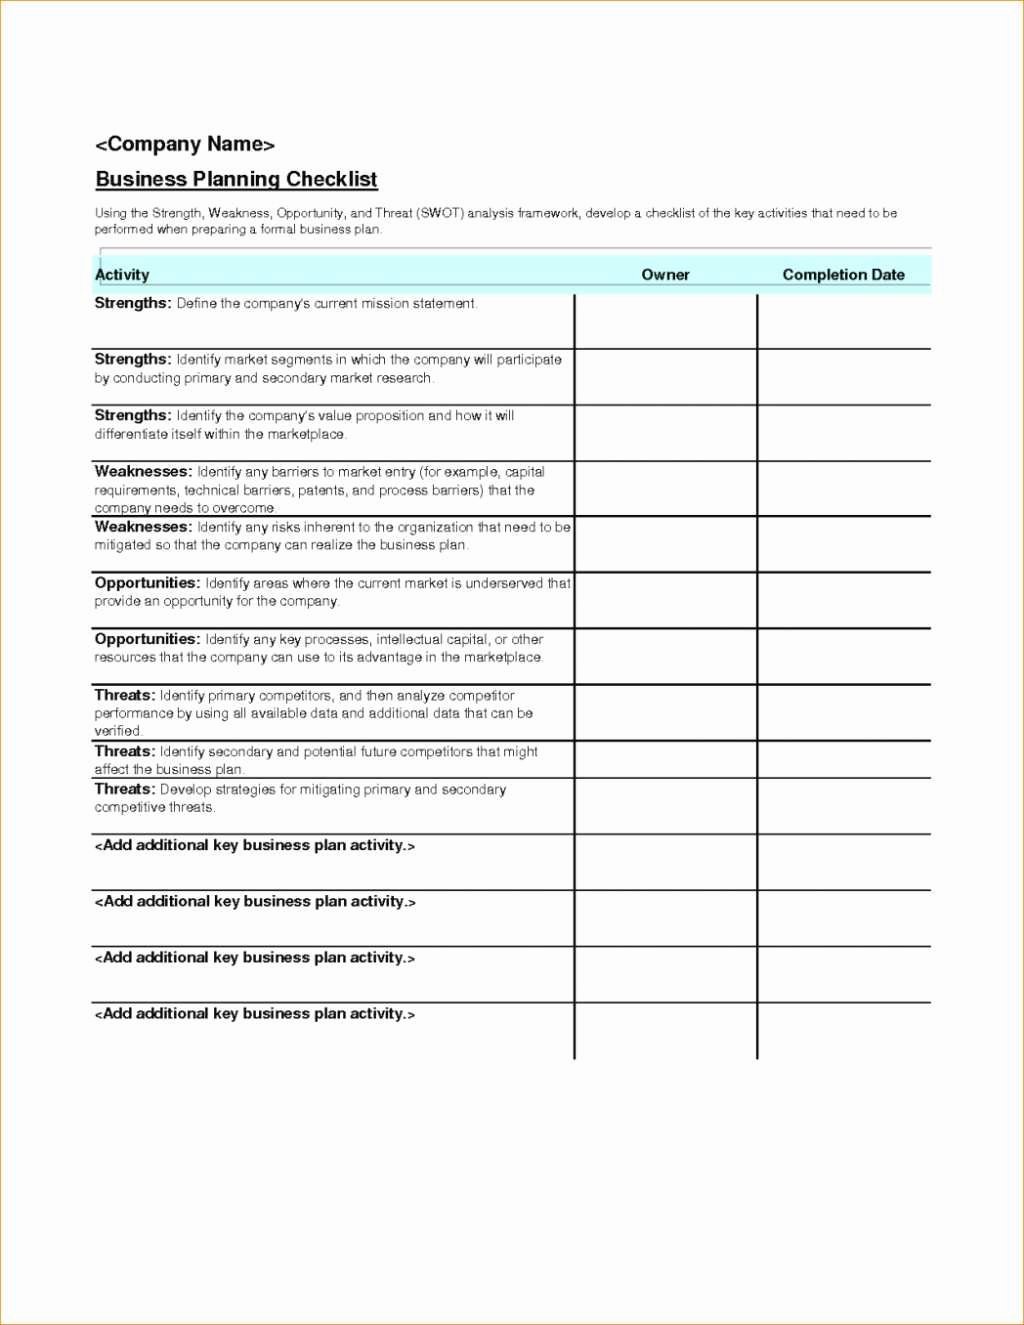 score business plan template pdf